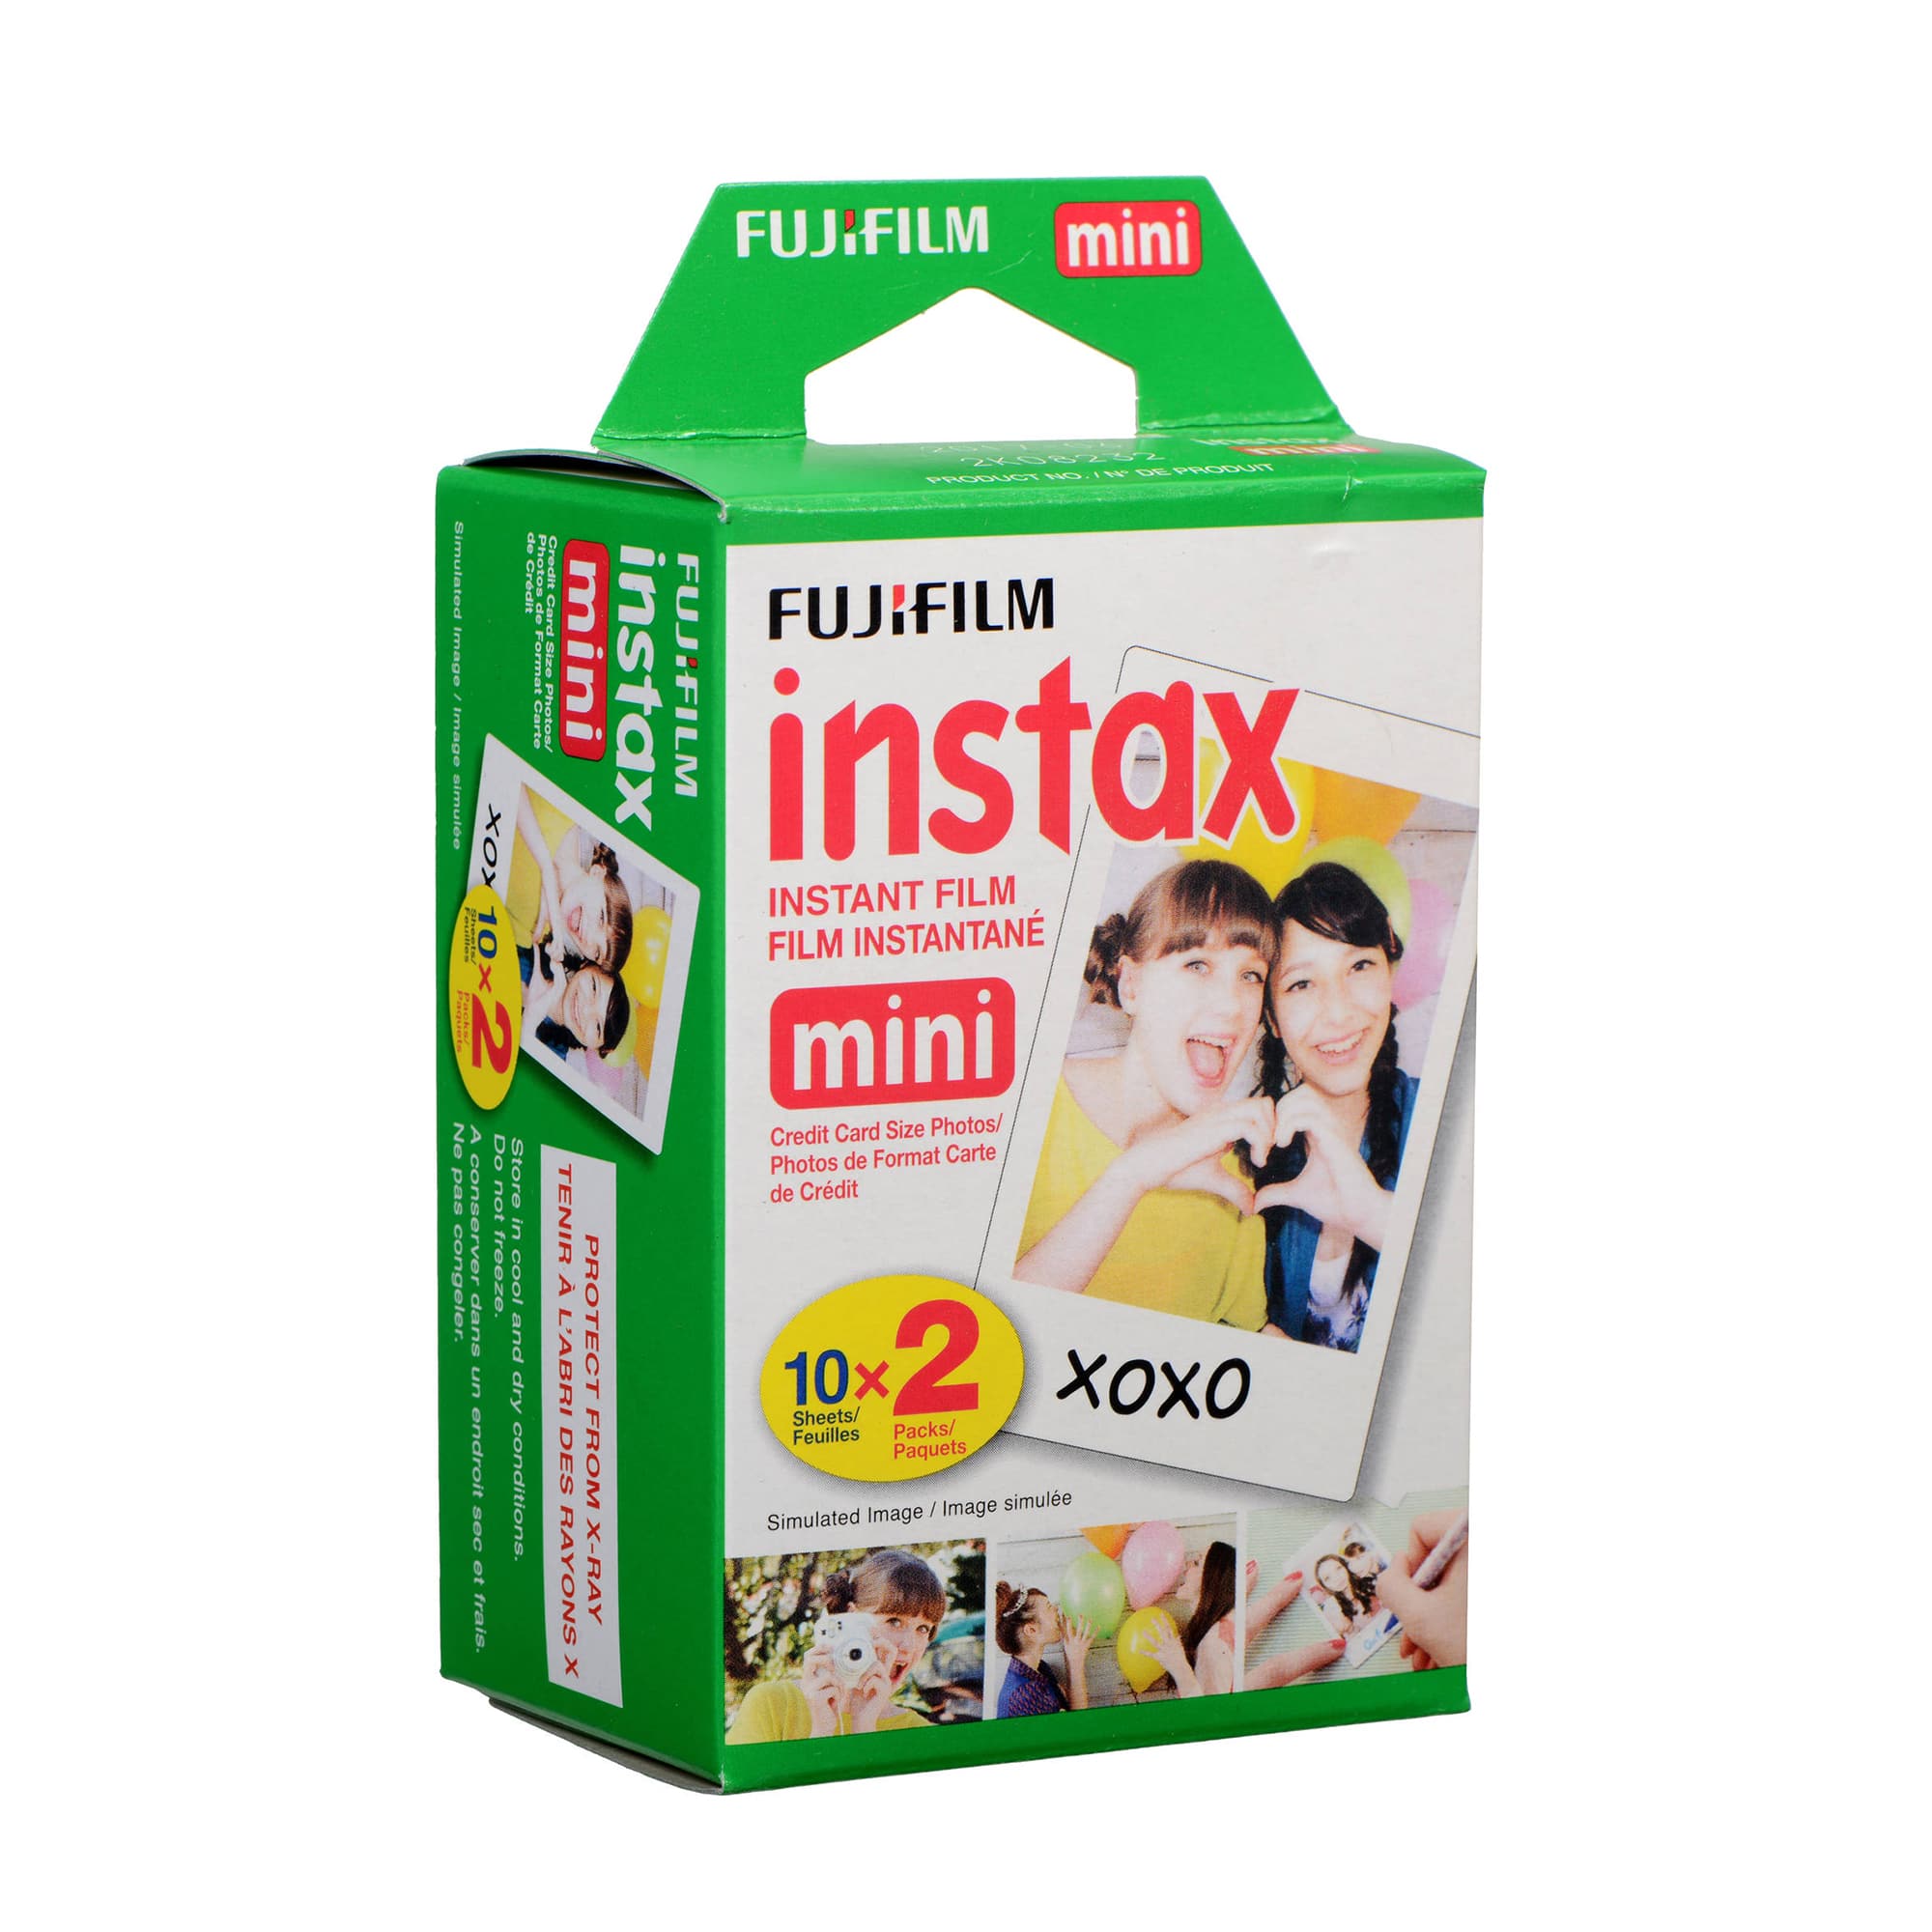 Pellicule Instax Mini Fujifilm Canada Inc, 10 feuilles 10 feuilles 